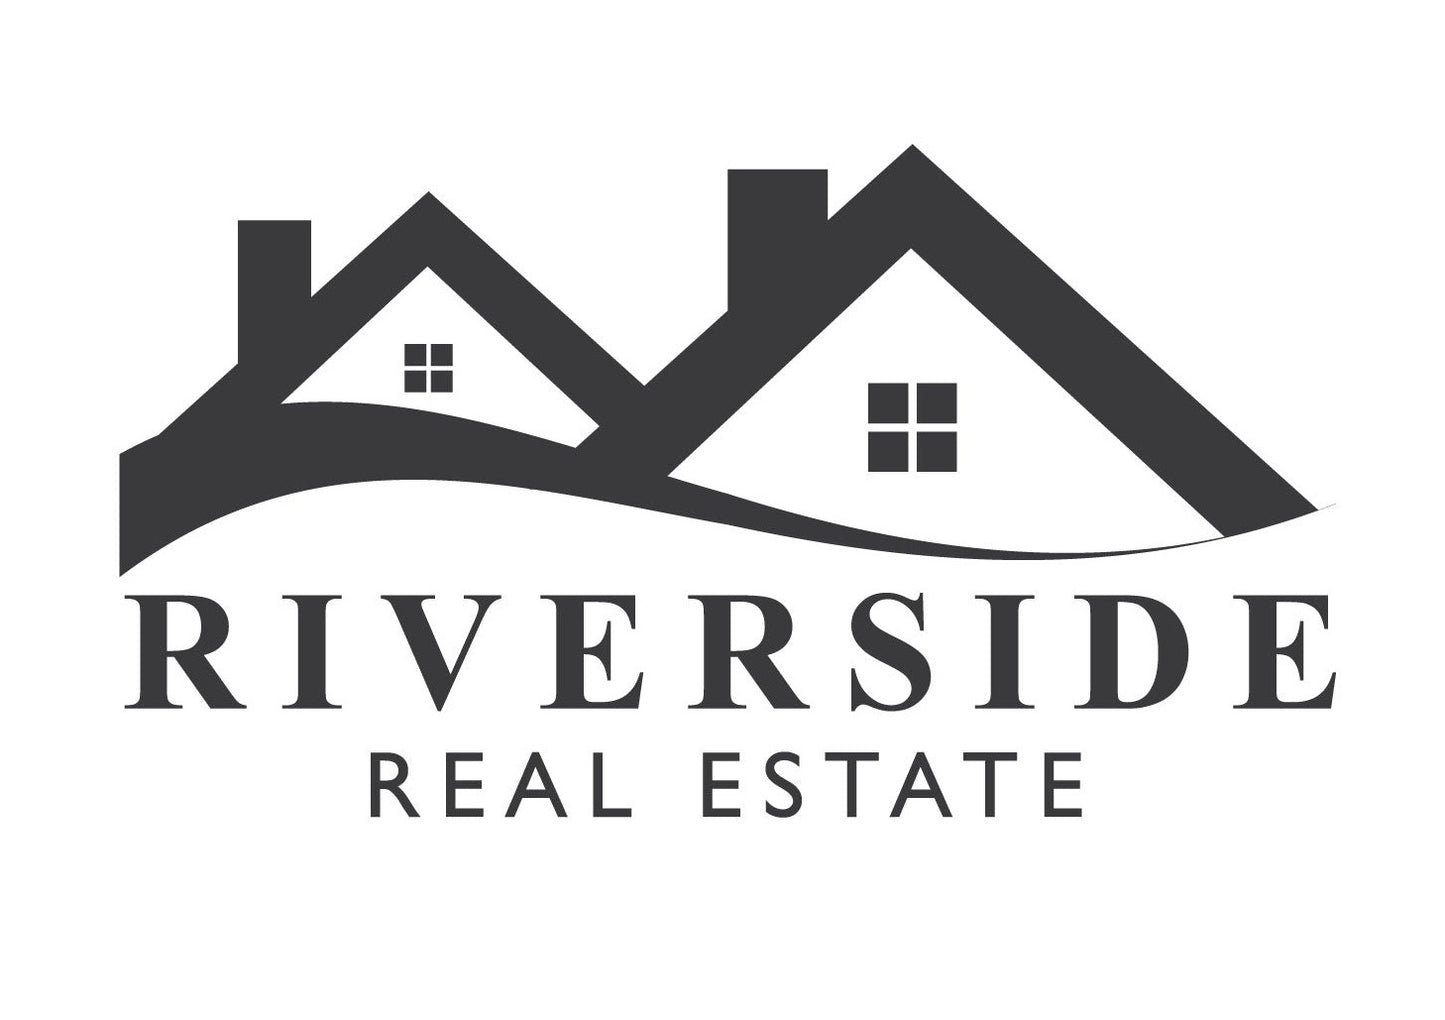 Logo Design | Real Estate Logo | Realtor Logo | Real Estate Marketing | House Logo | Home Logo | Wave Design | Water Design